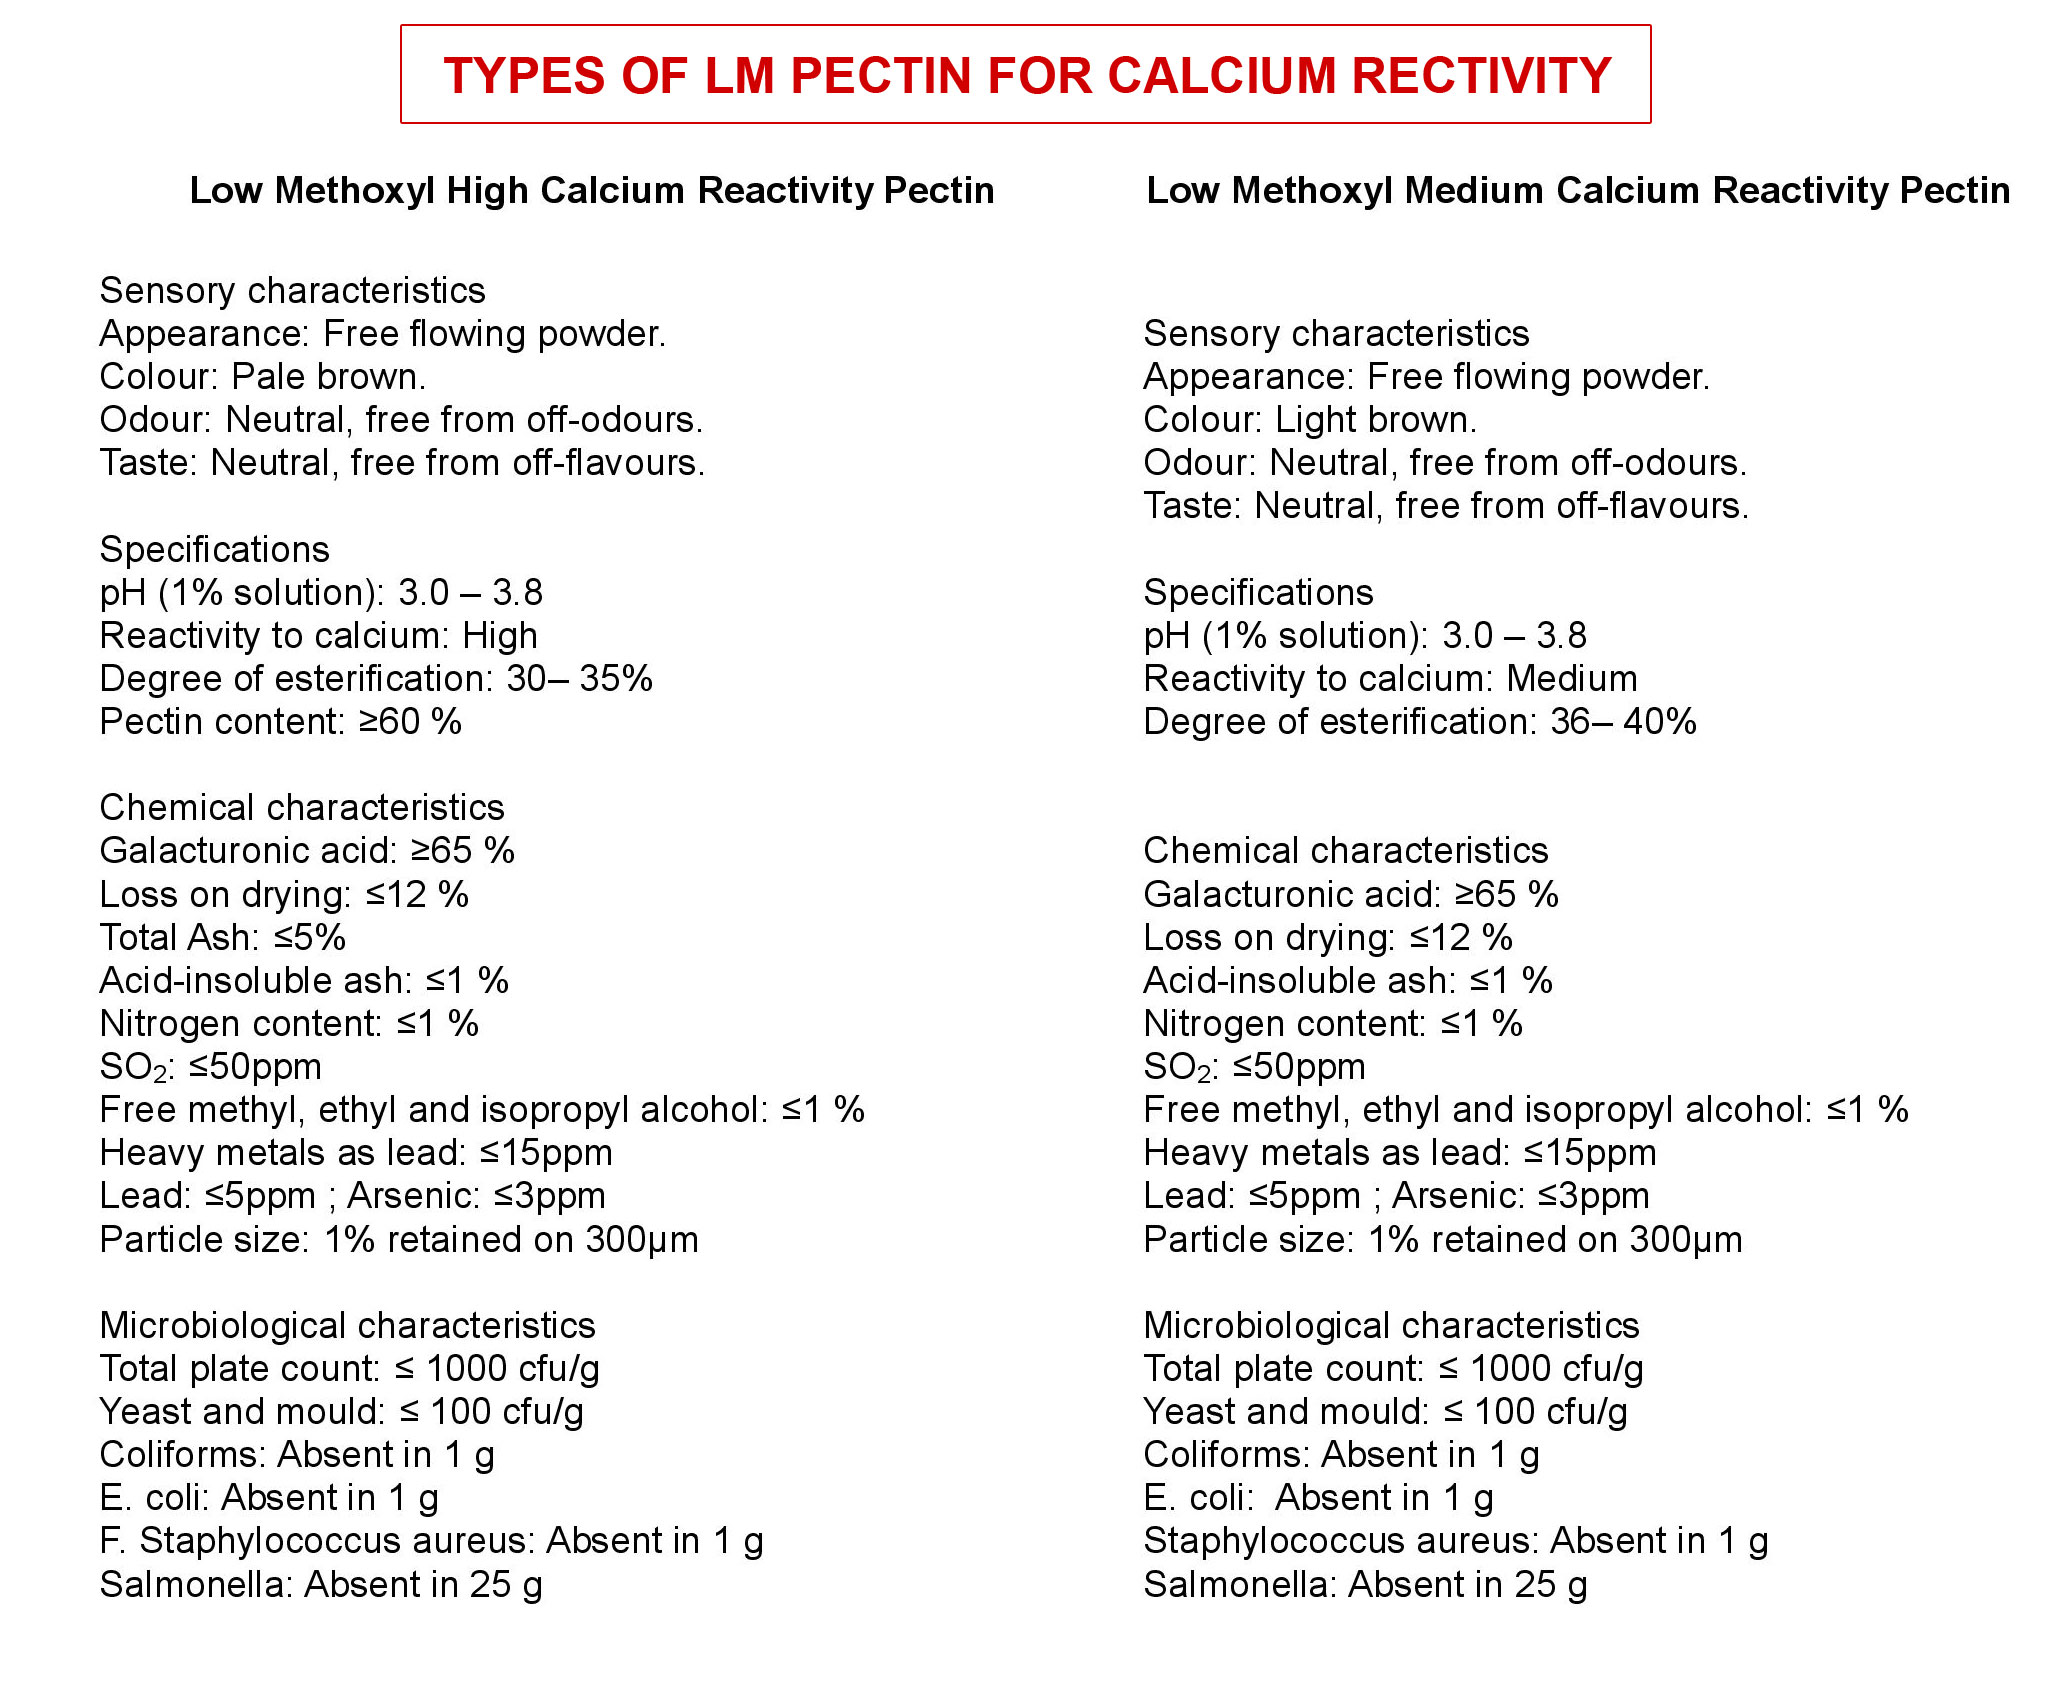 Types of LM Pectin for Calcium Rectivity